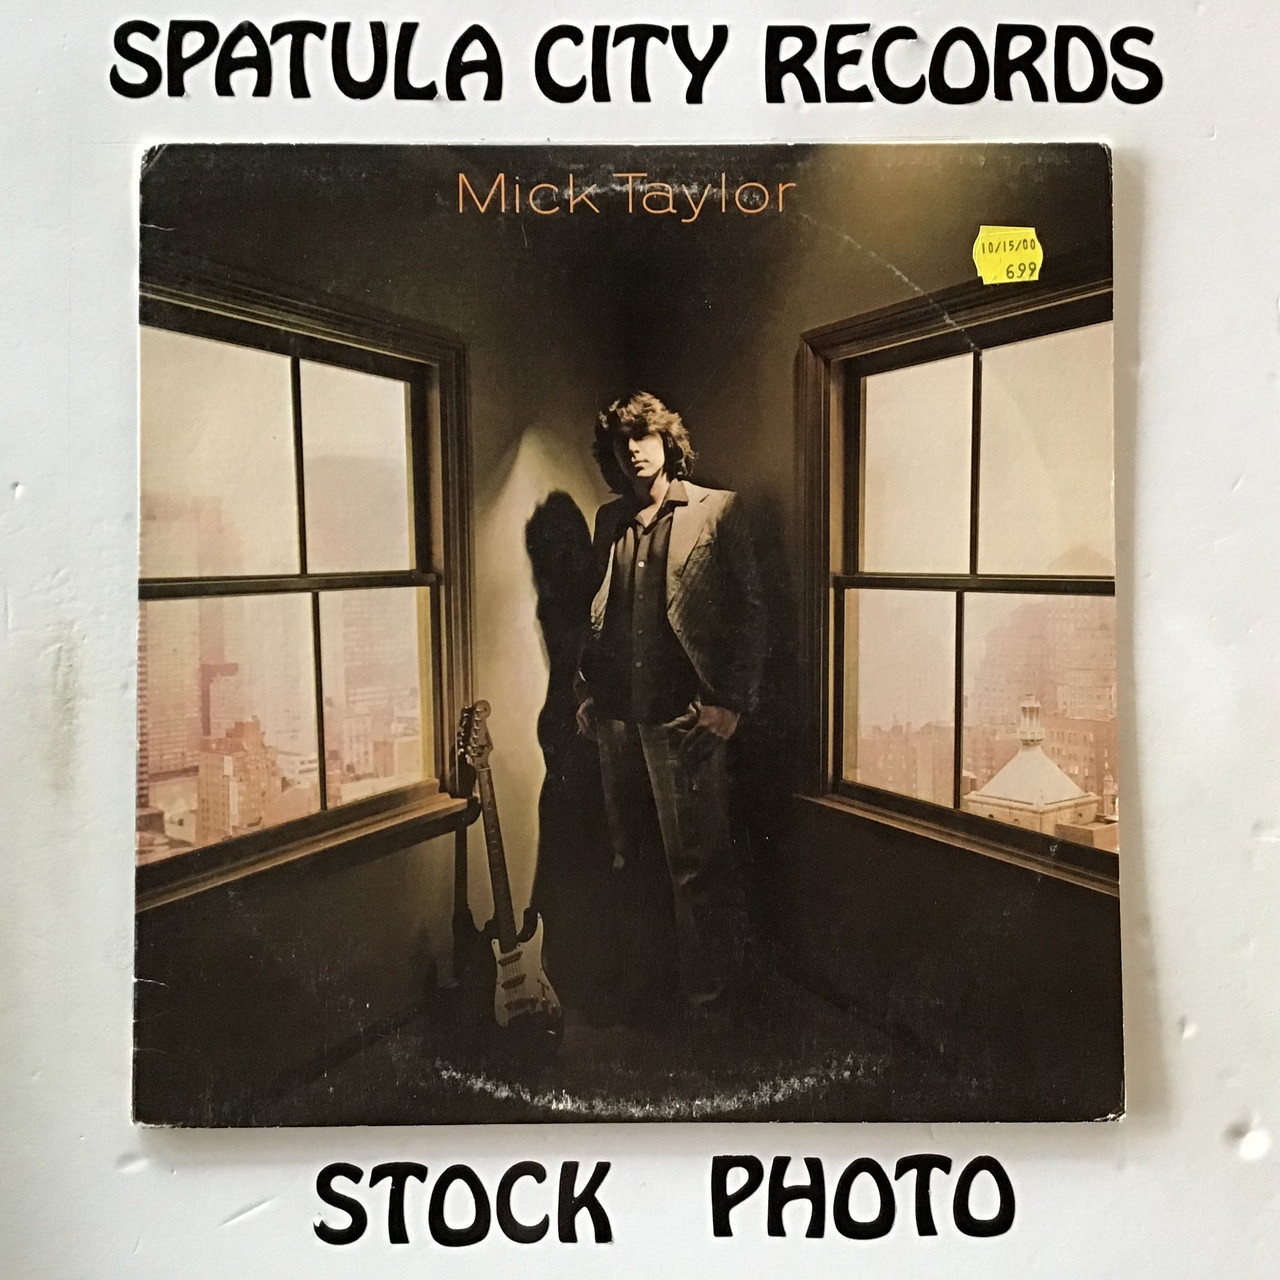 Mick Taylor - Mick Taylor - PROMO - vinyl record LP